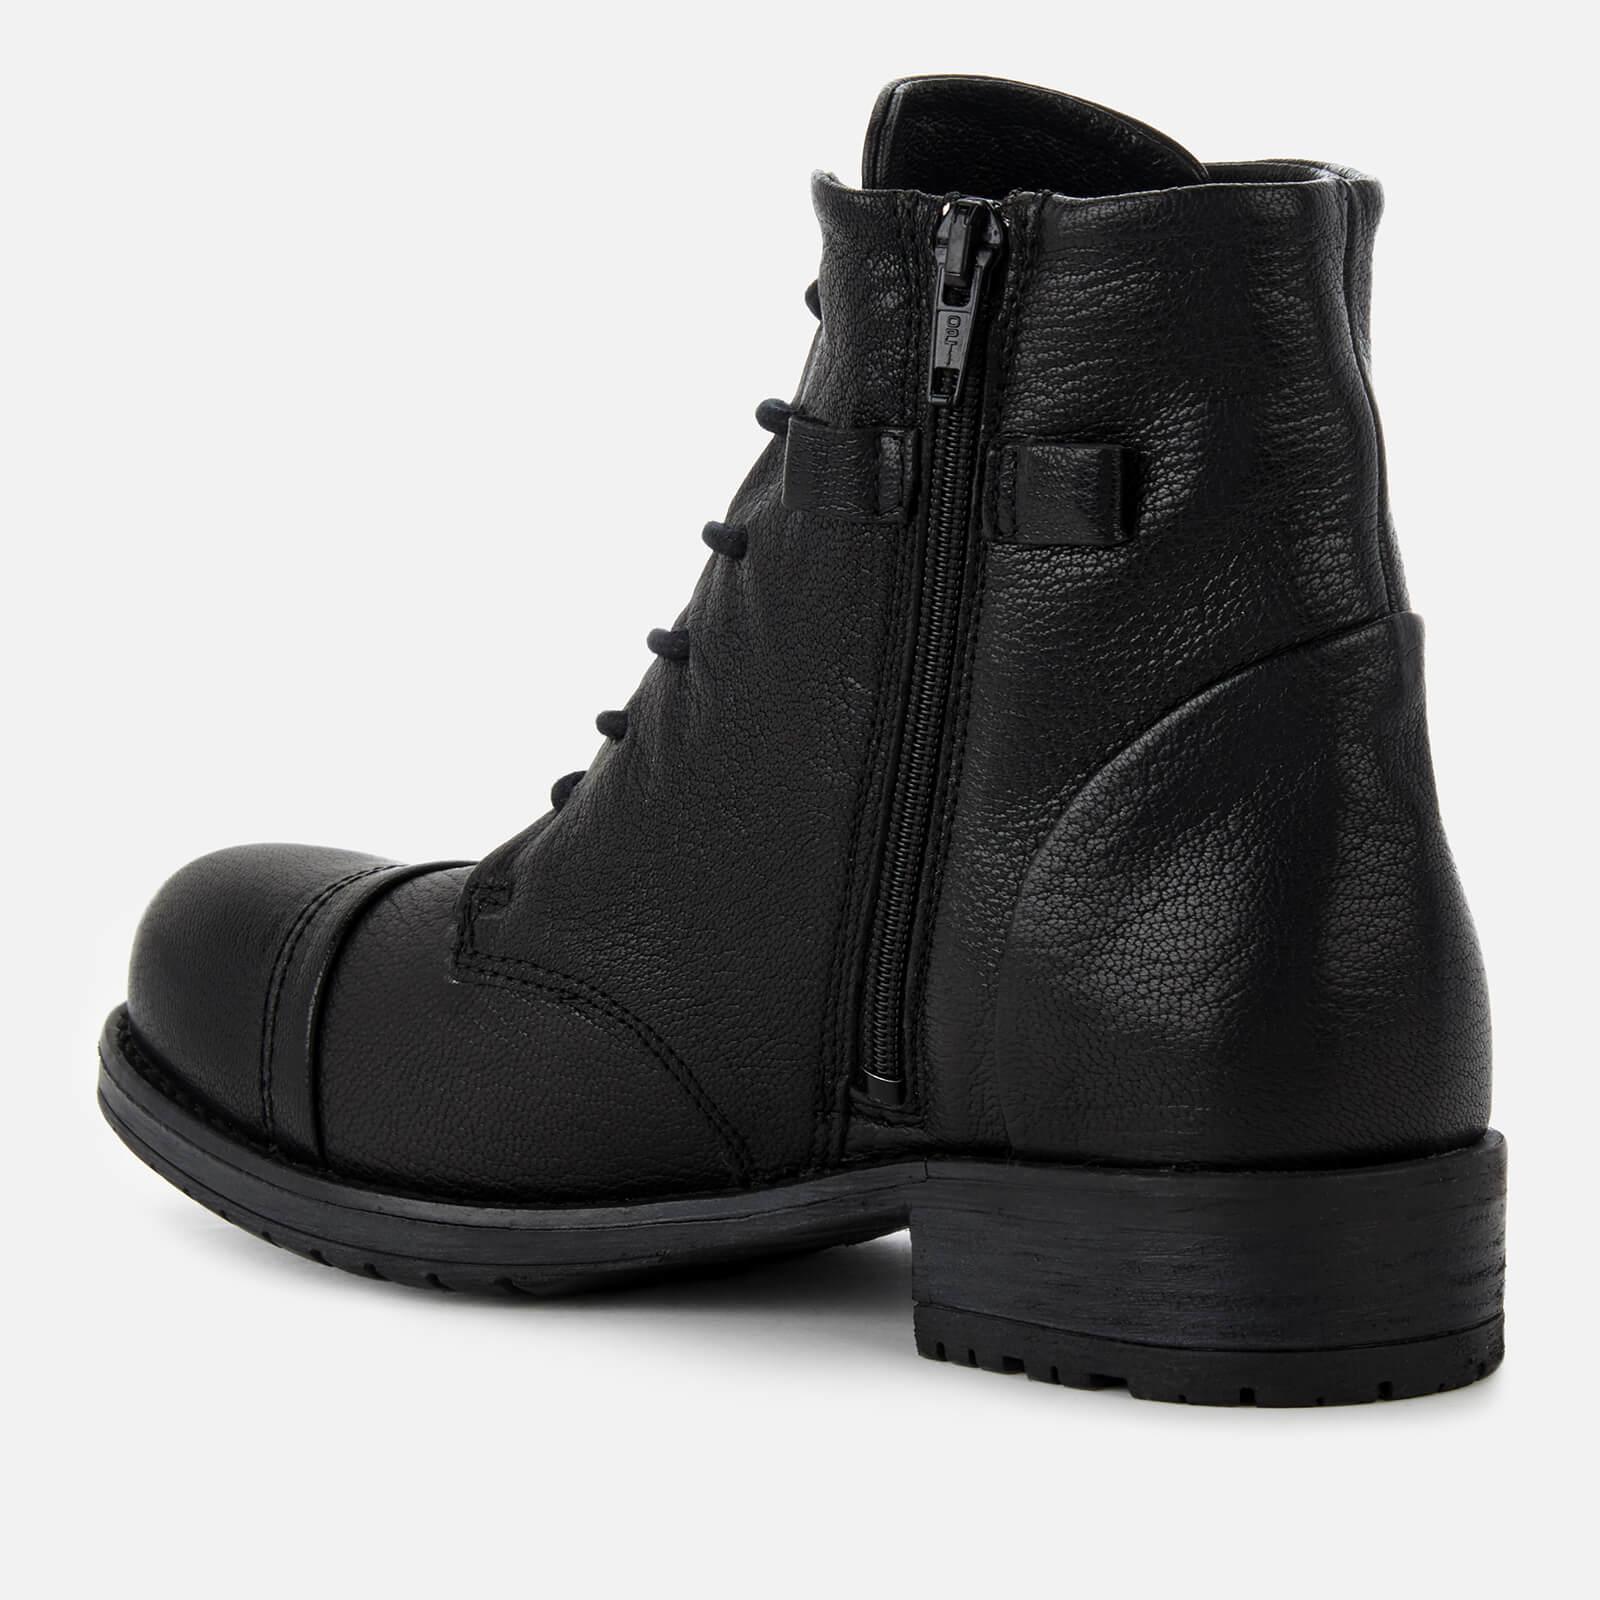 adelia stone boots